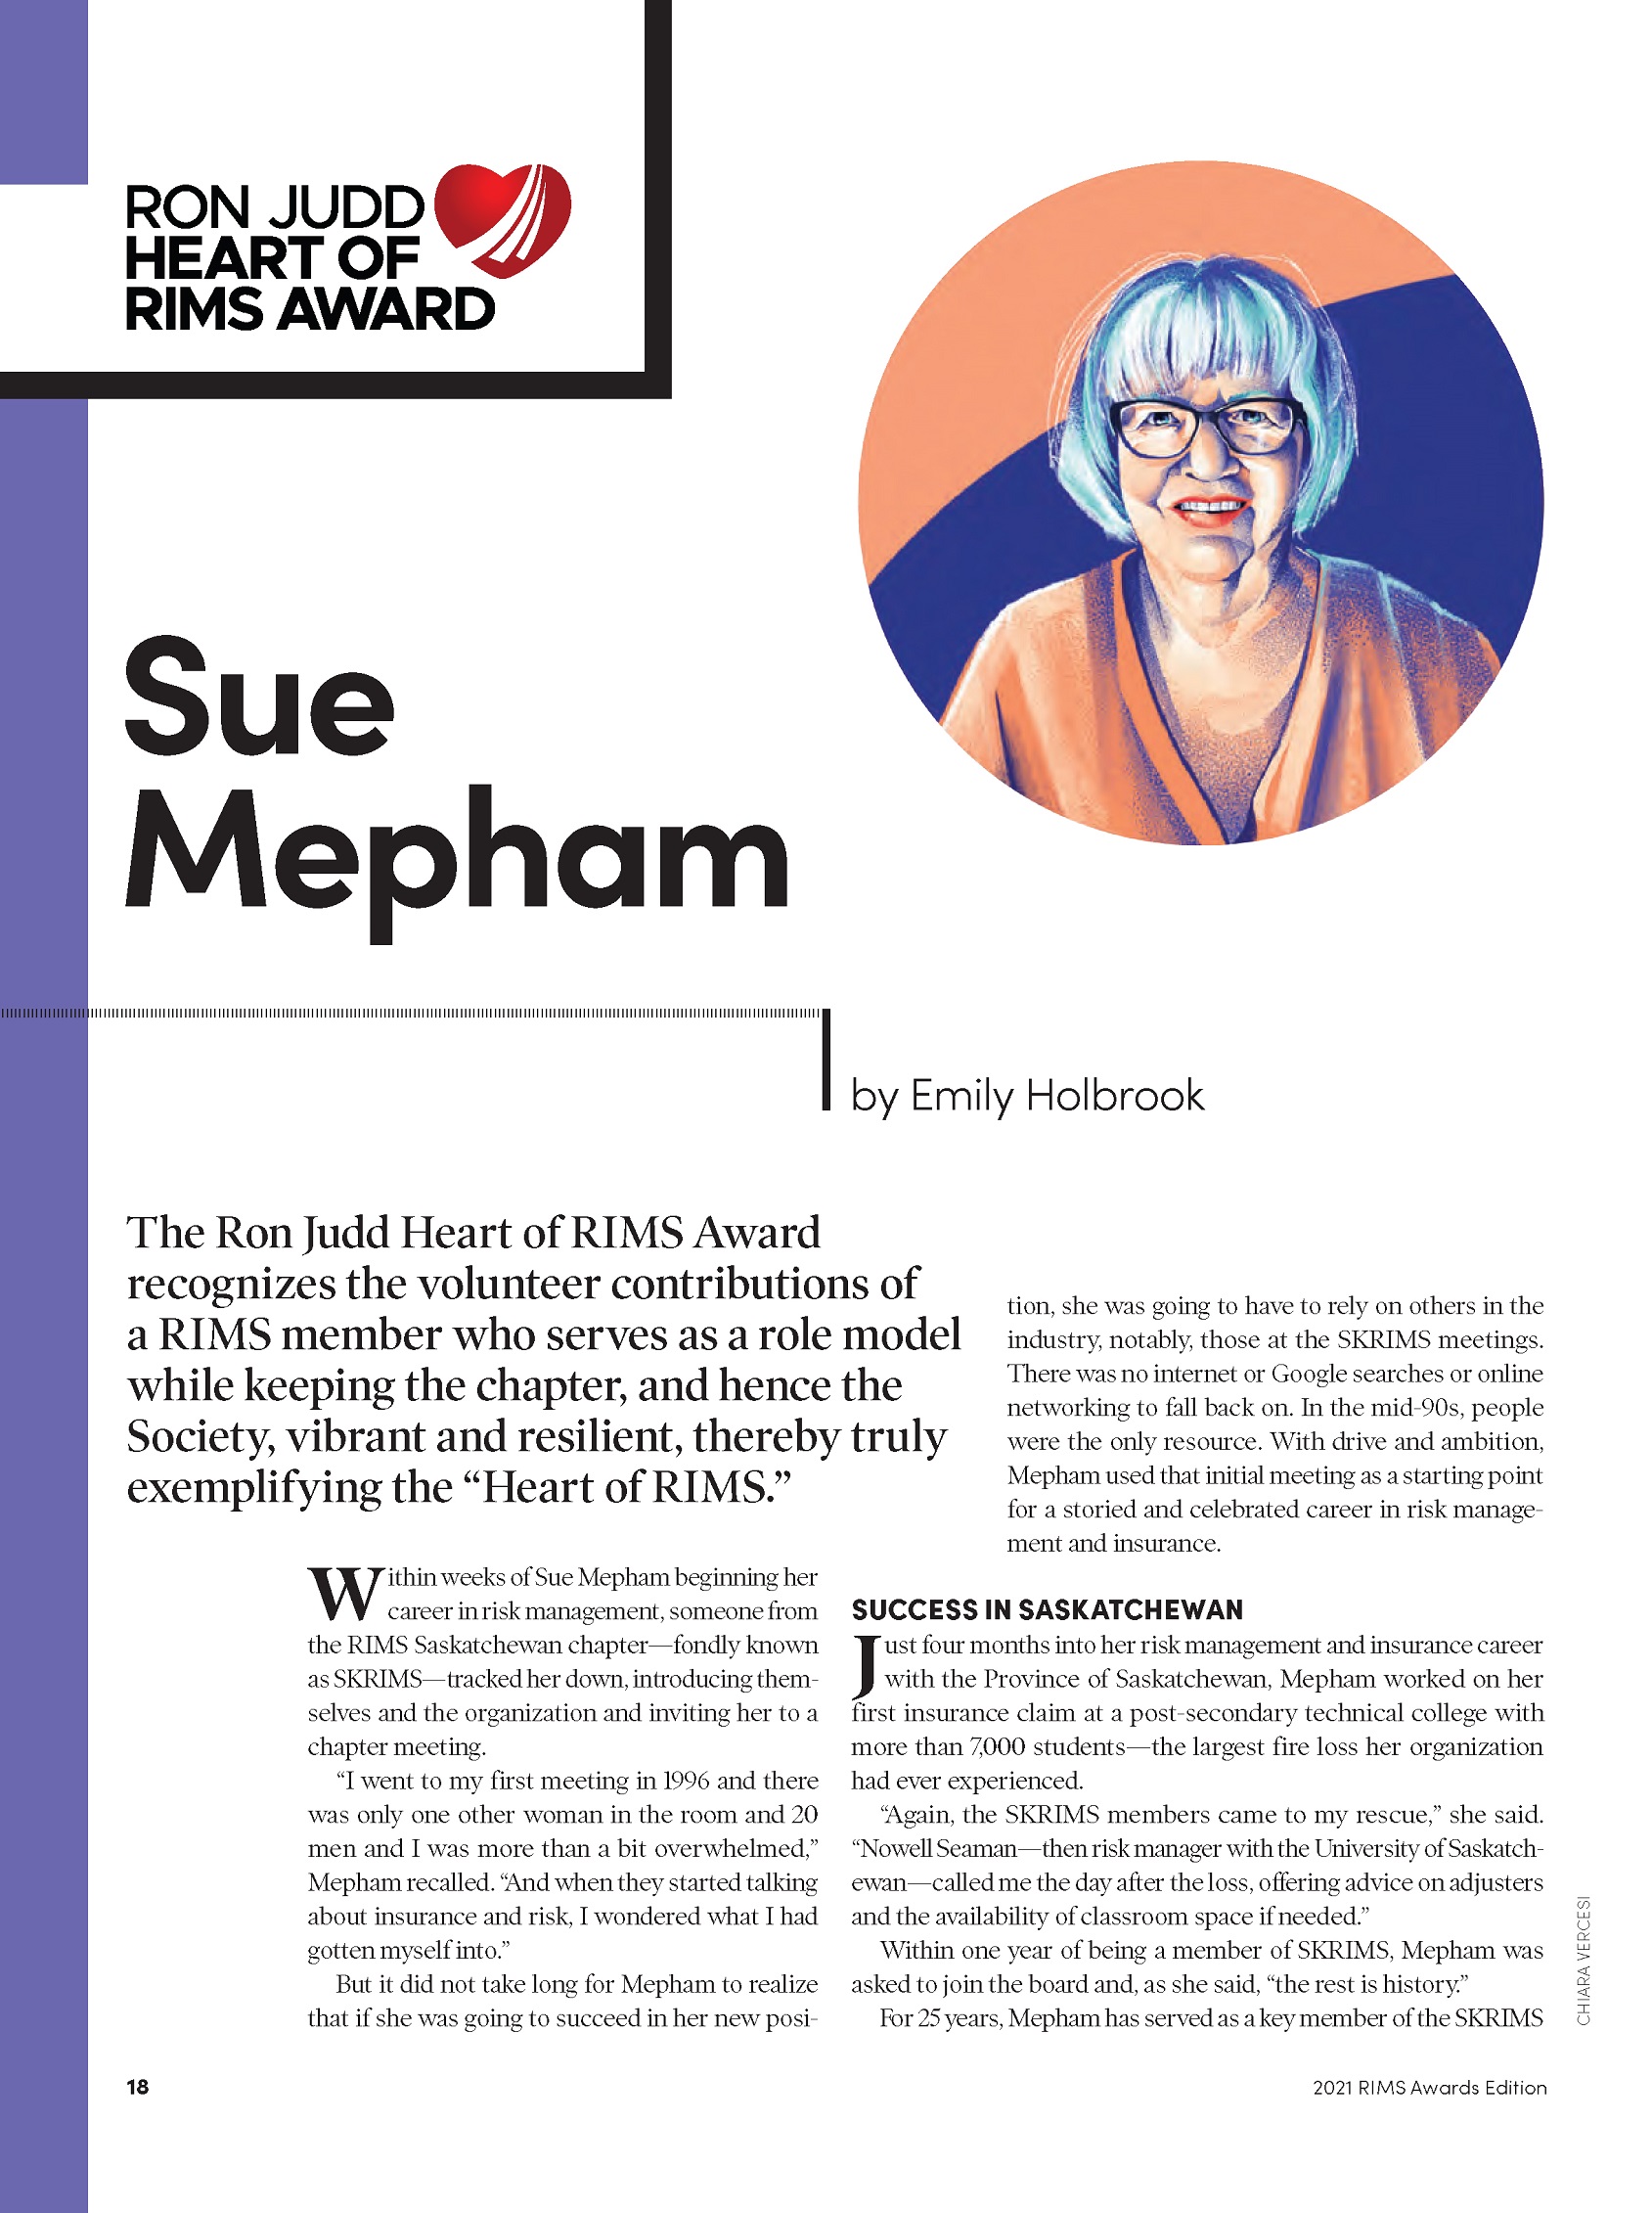 Chiara Vercesi Risk Management portrait illustration of Sue Mepham